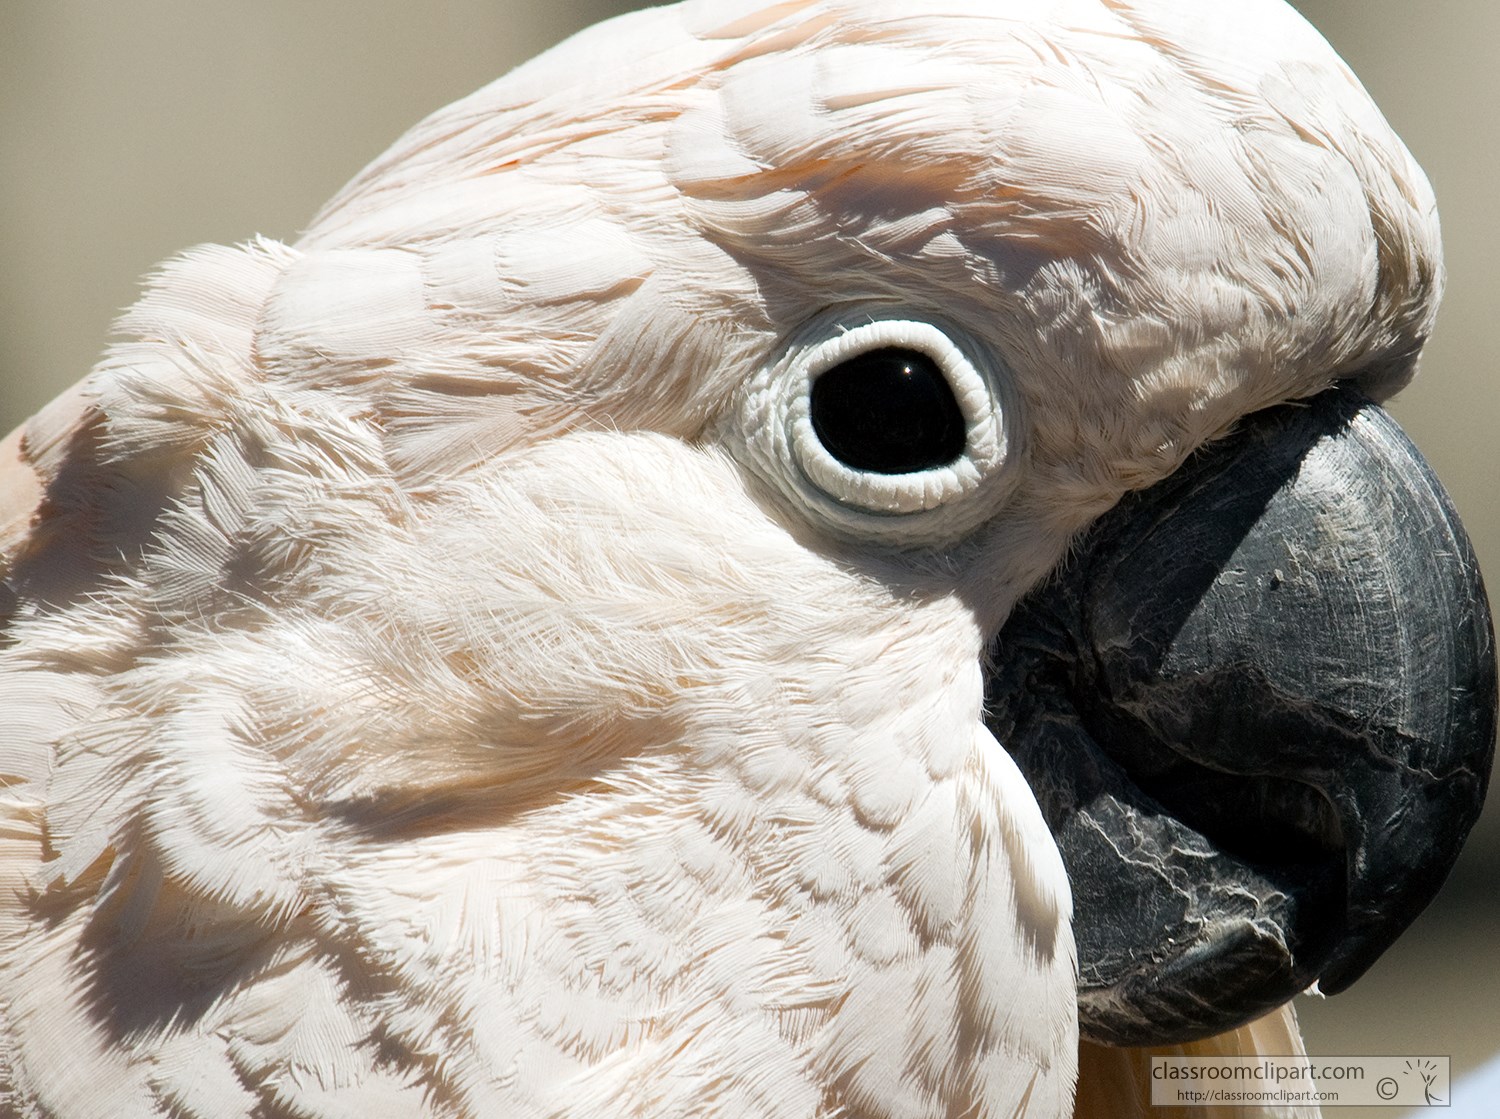 white-cockatoo-parrot-side-view-closeup.jpg